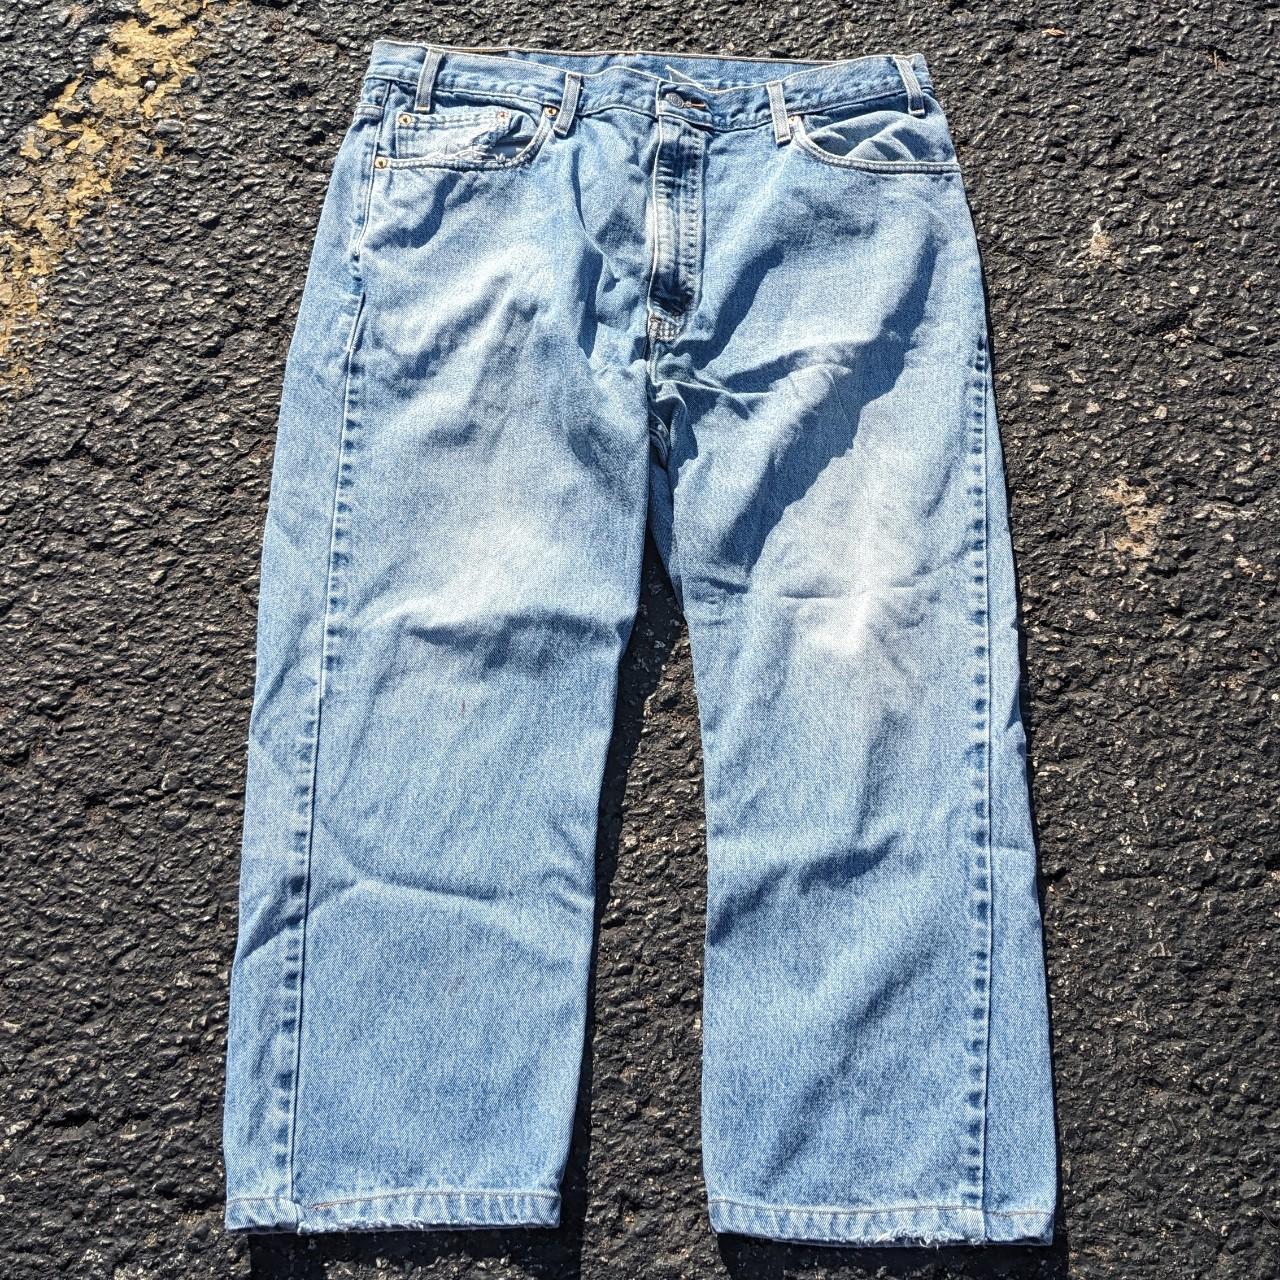 Vintage Levi Light Wash Jeans #levis #jeans... - Depop